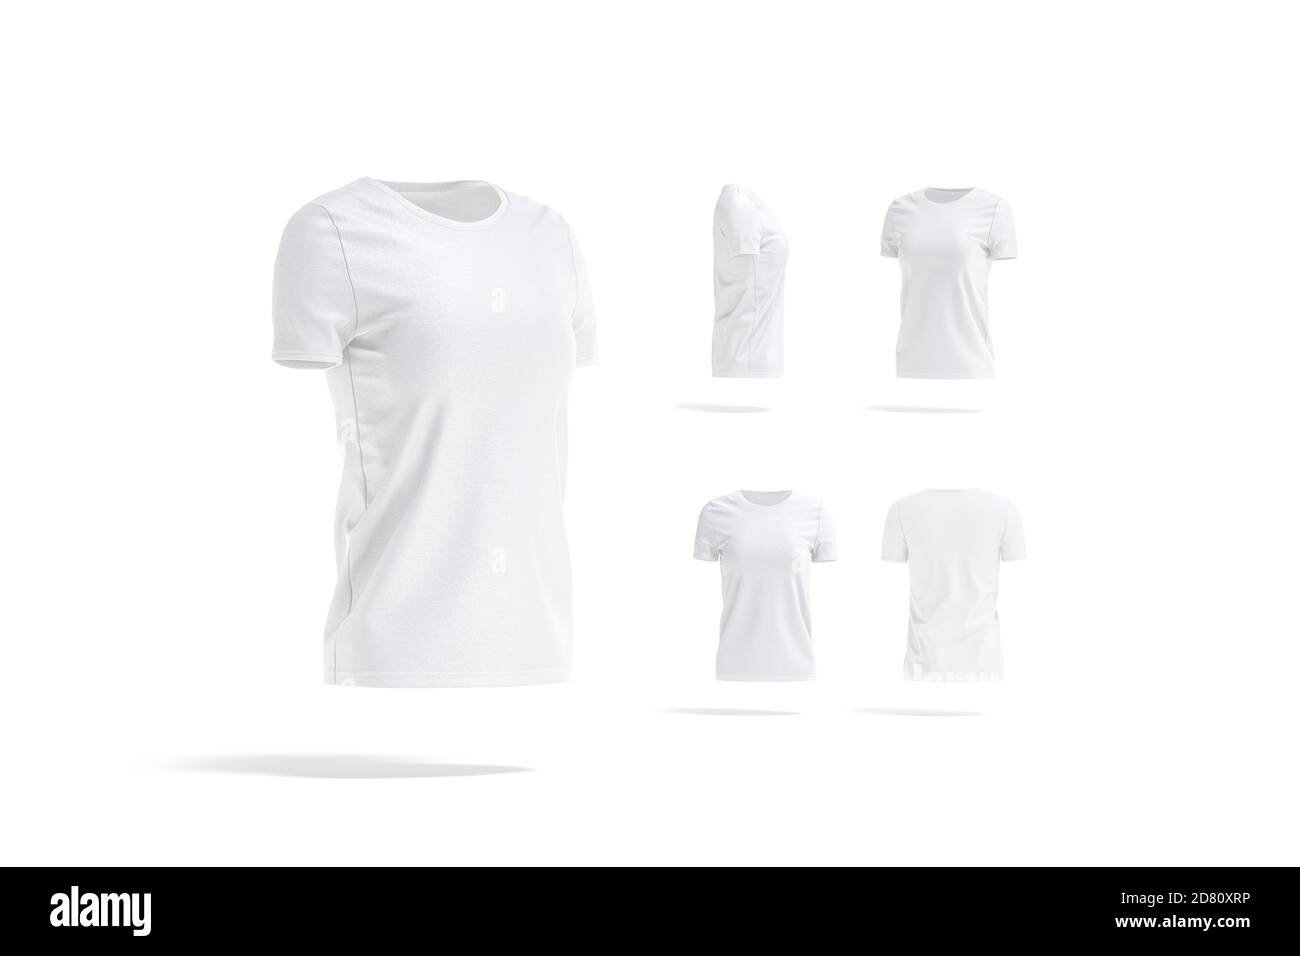 Blank white women t-shirt mockup, different views Stock Photo